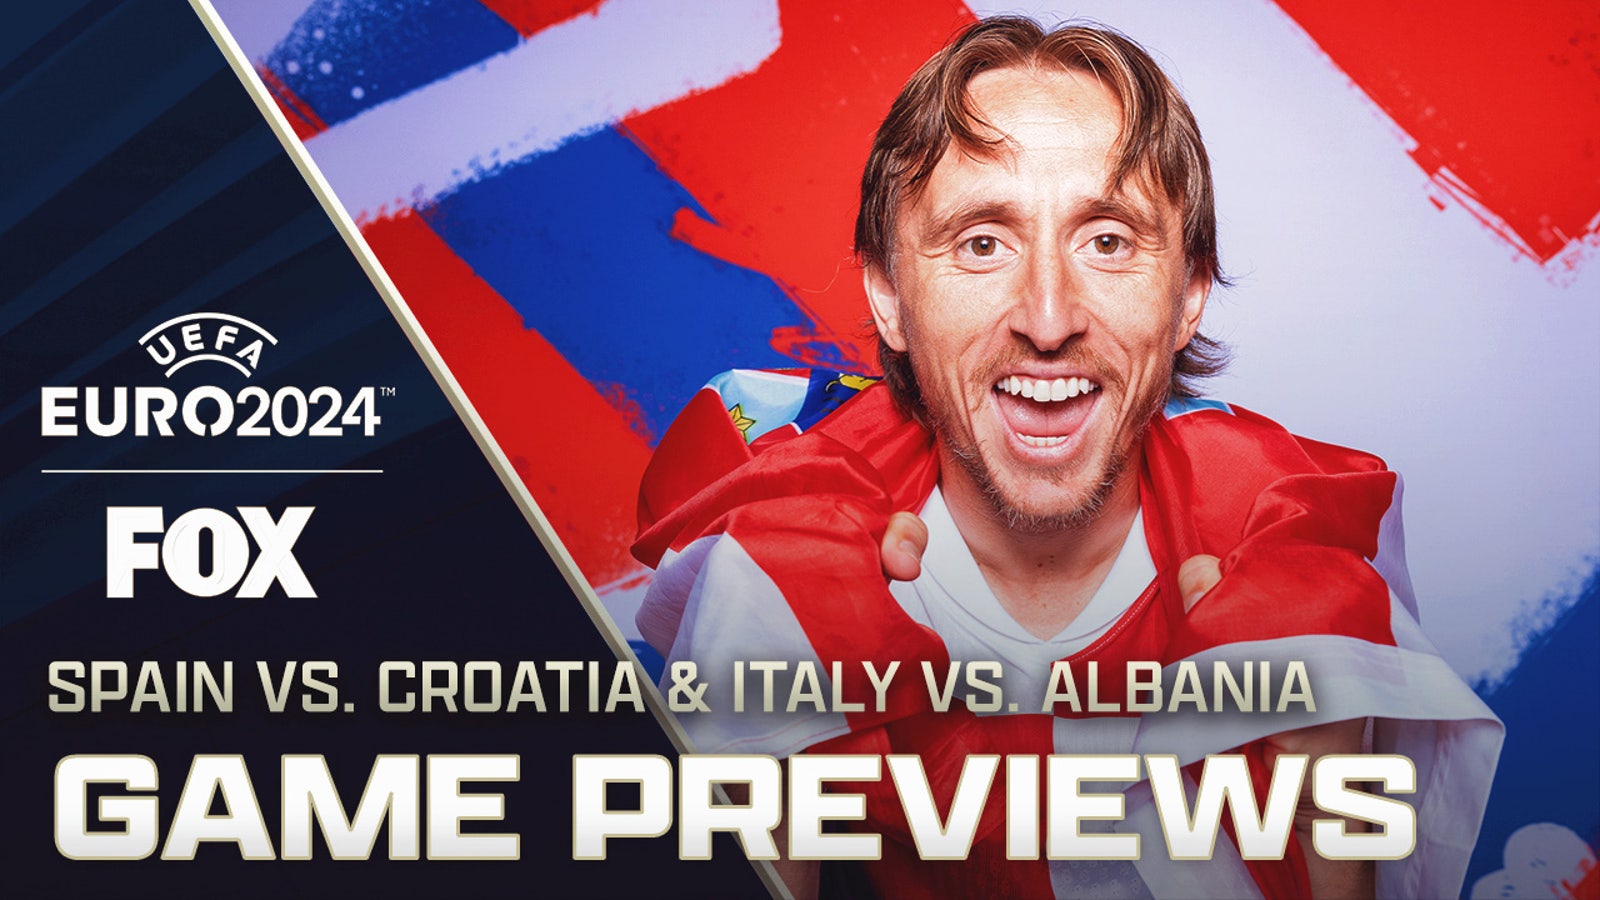 Spain vs. Croatia and Italy vs. Albania: Who will win these anticipated matches?